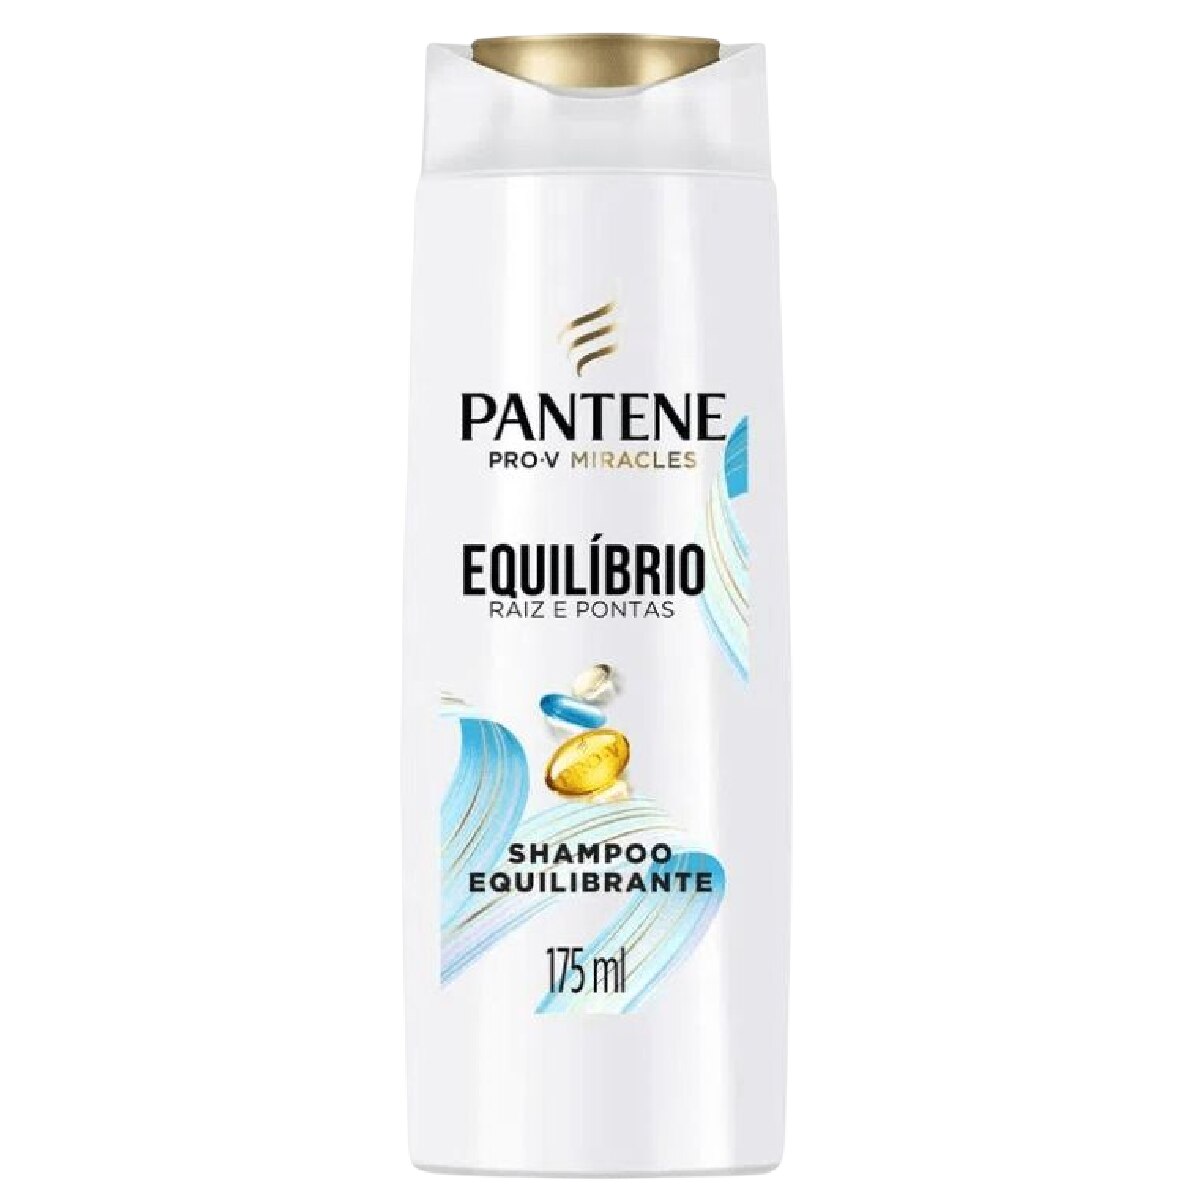 Shampoo Pantene Pro-V Miracles Equilibrio Raiz e Pontas 175ml